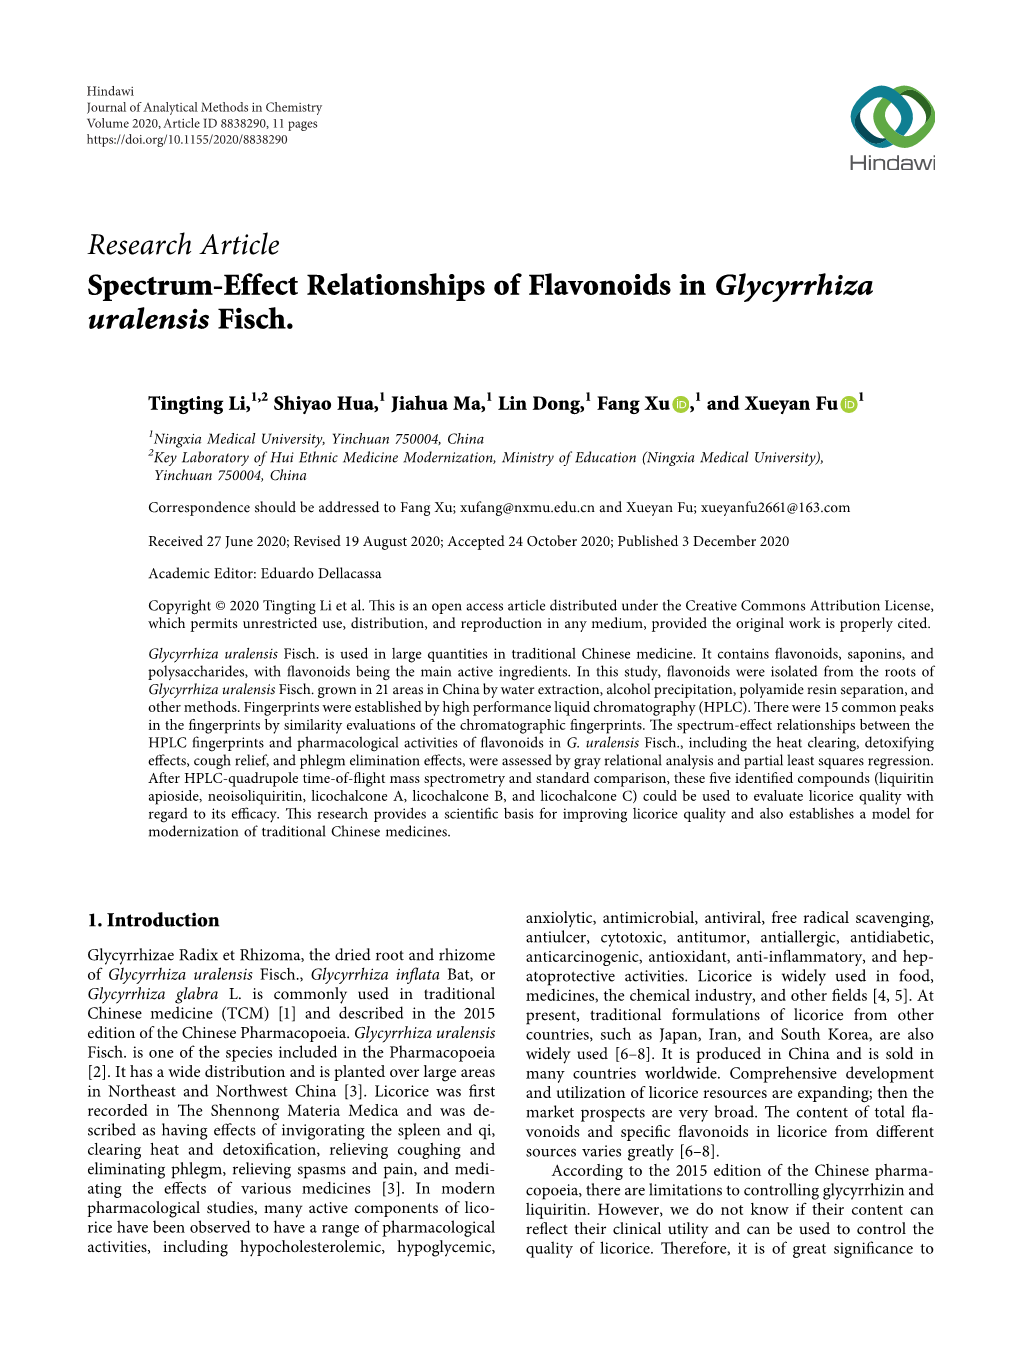 Research Article Spectrum-Effect Relationships of Flavonoids in Glycyrrhiza Uralensis Fisch